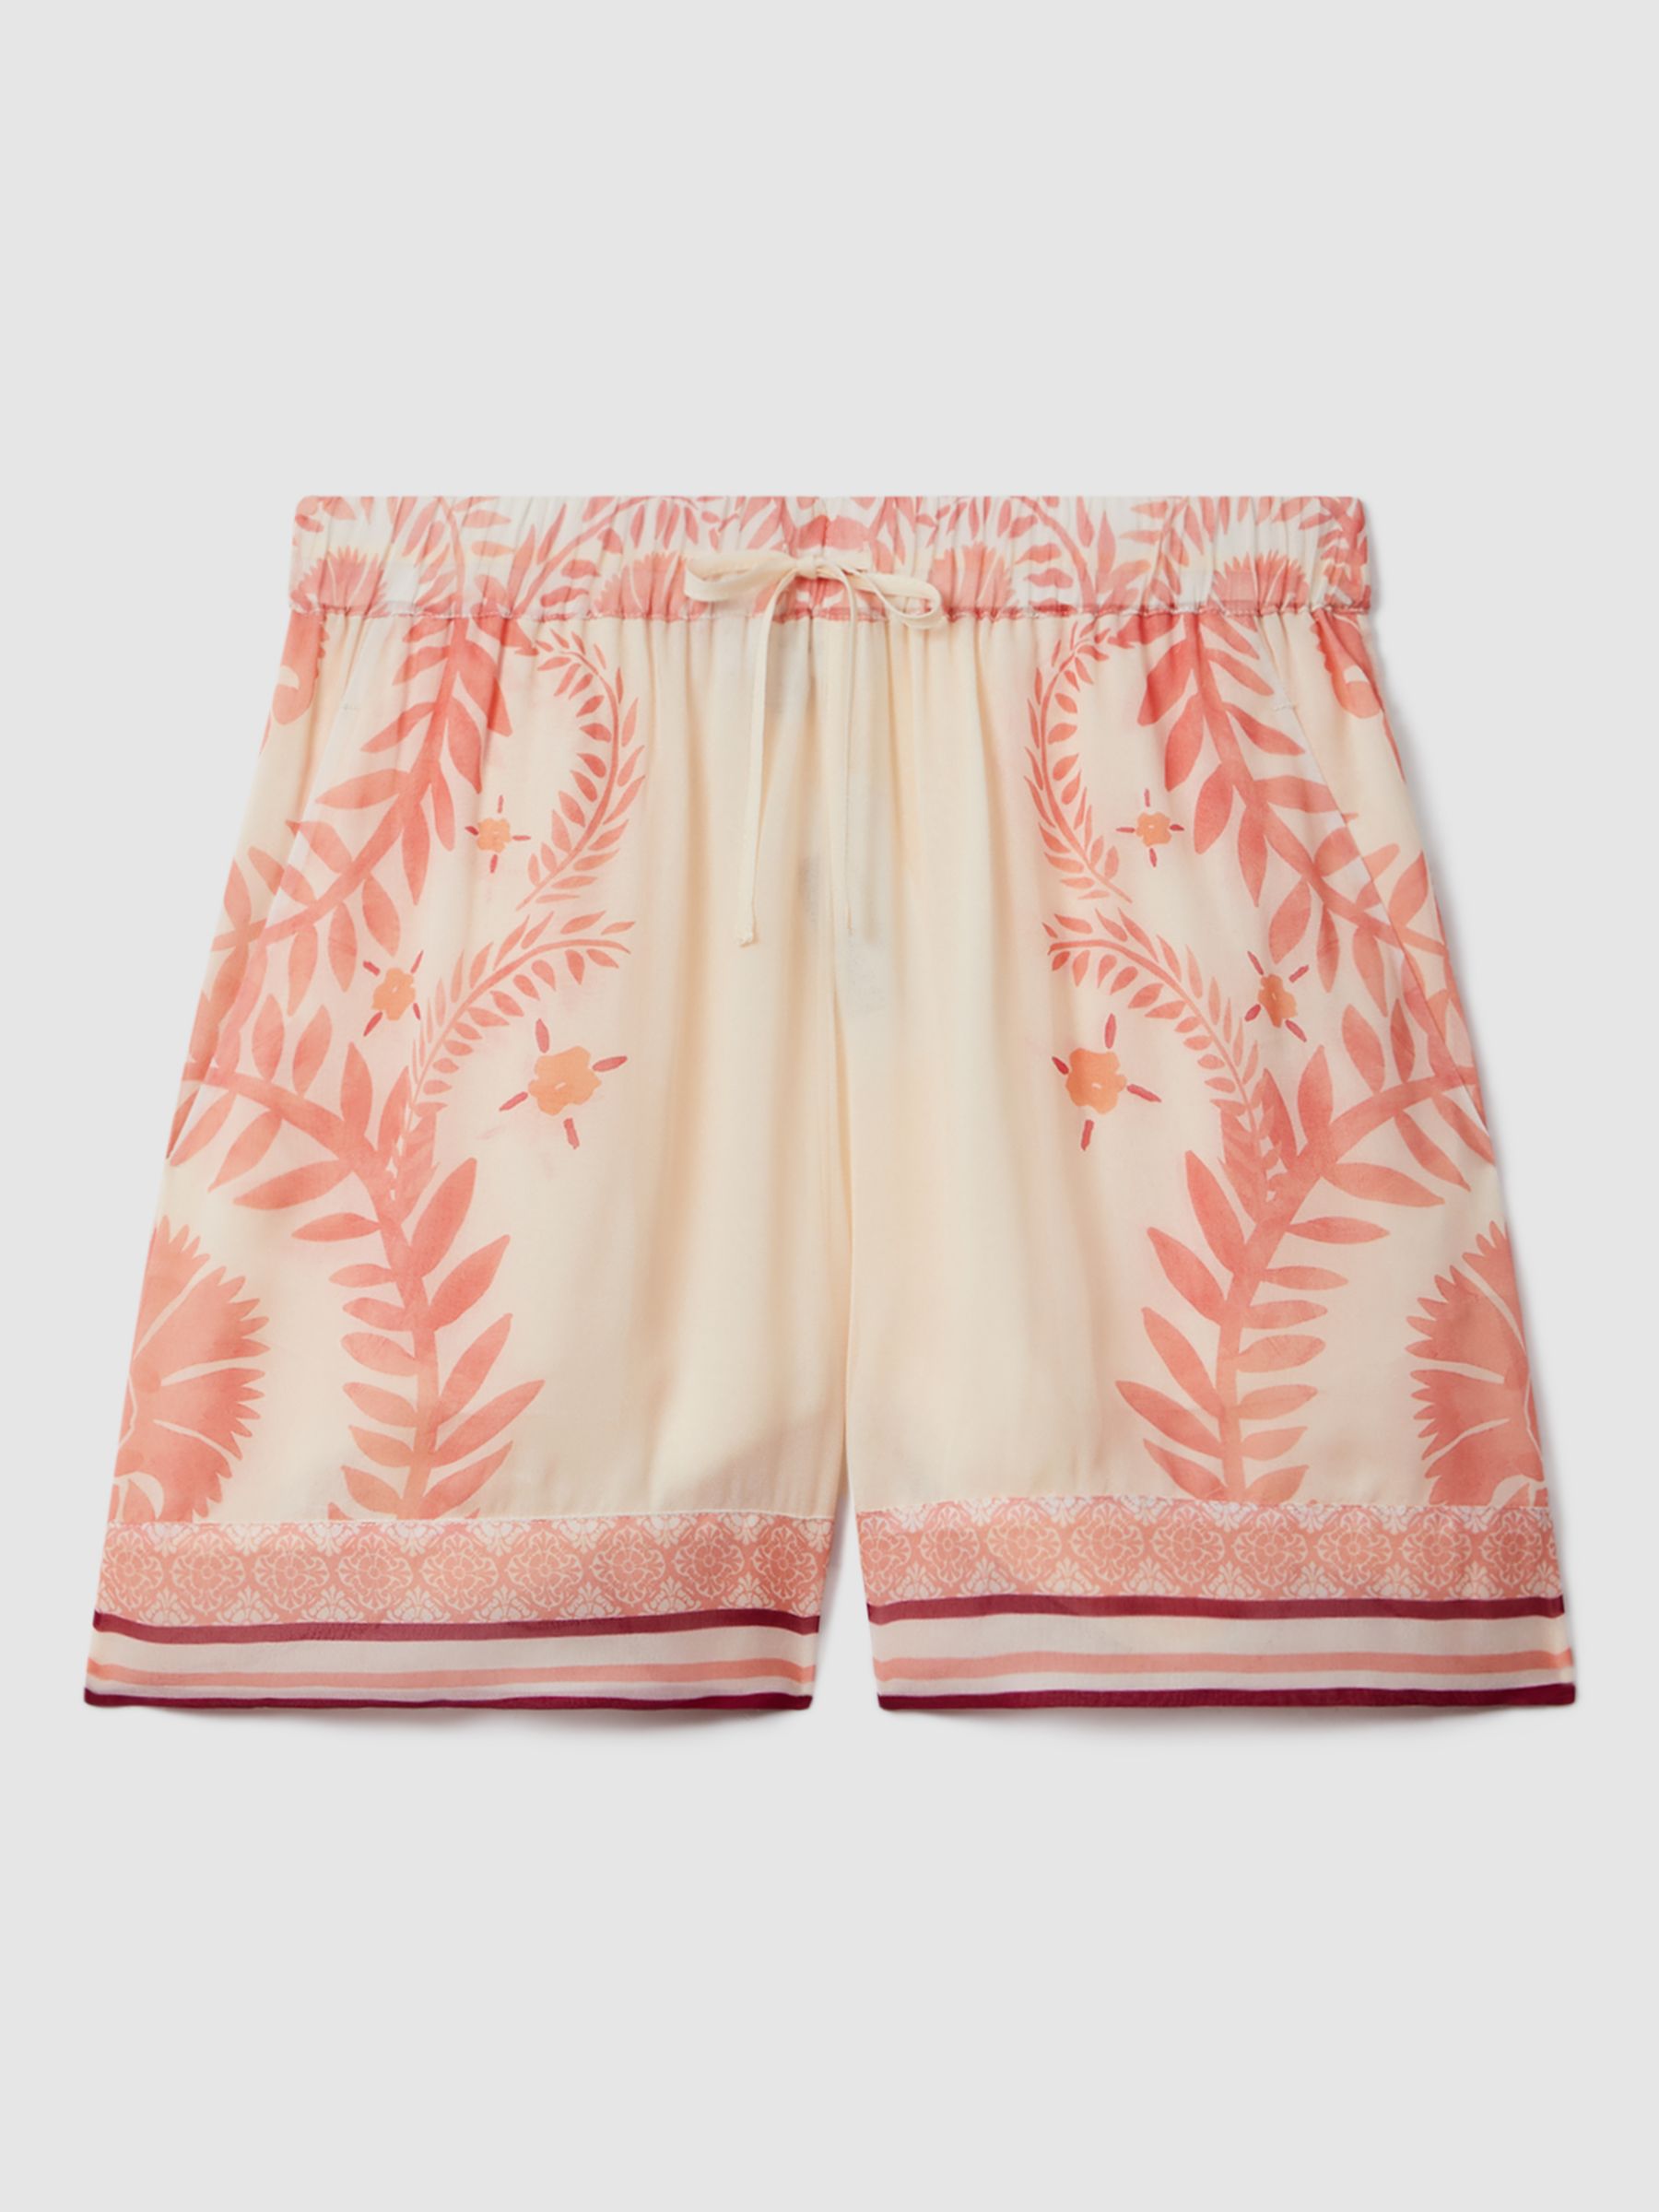 Reiss Chloe Fern Print Shorts, Cream/Coral, 6